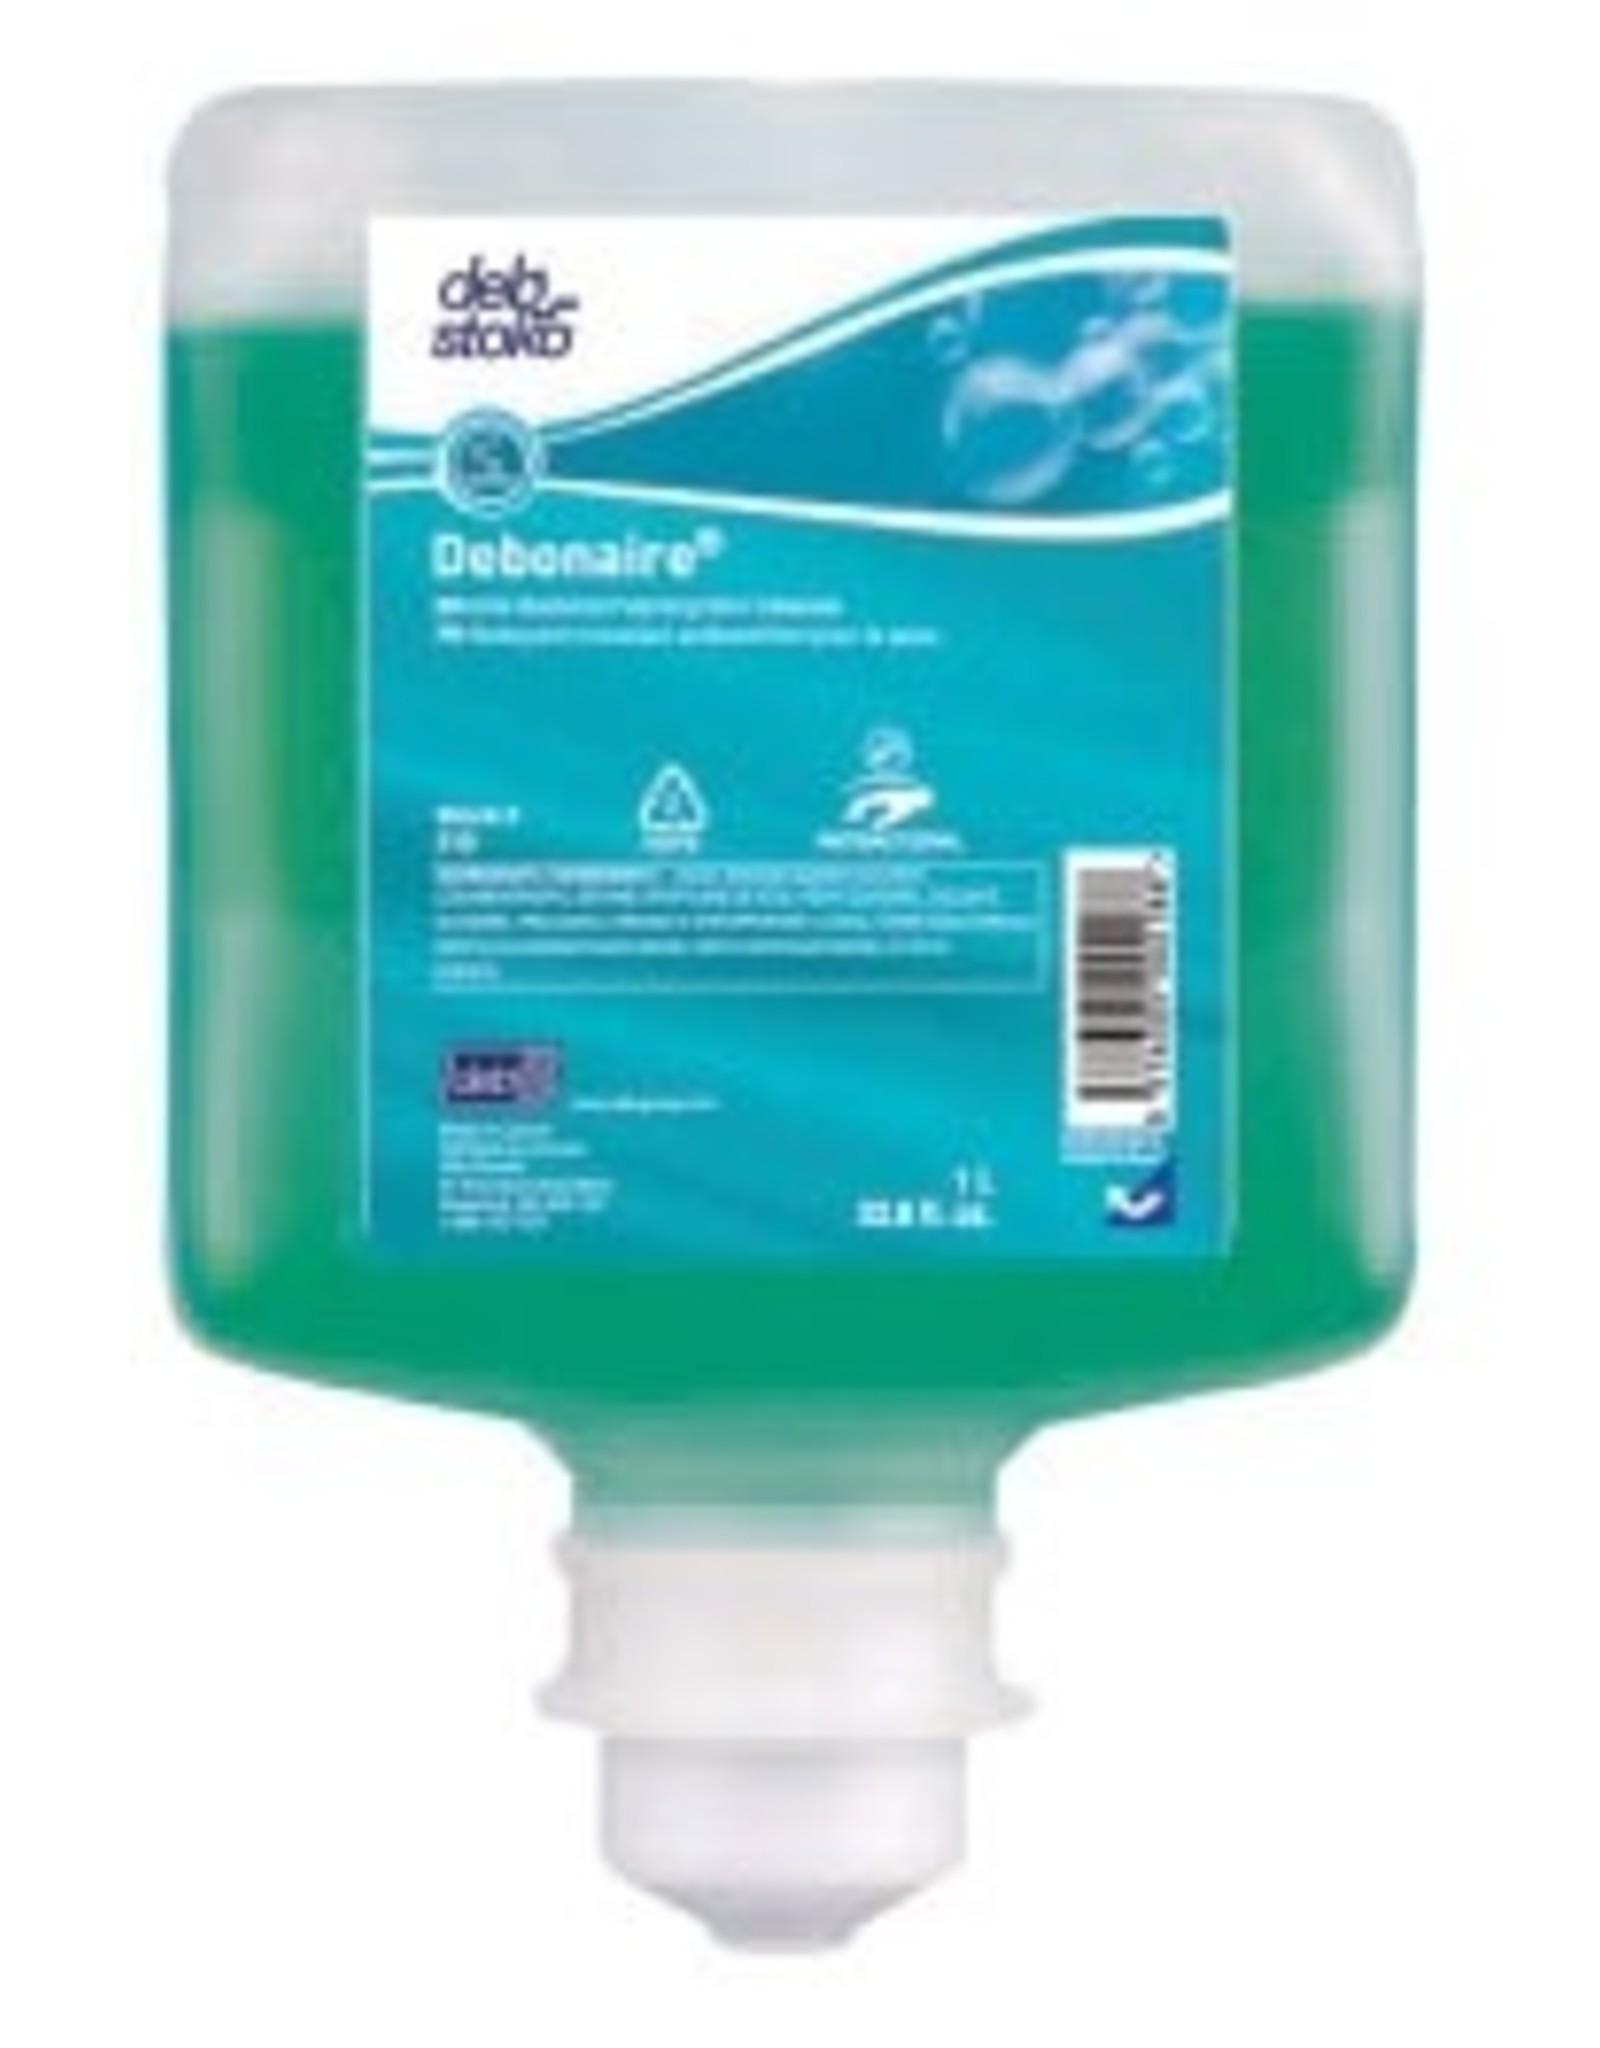 Deb/SCJ Deb Debonaire Anti-Bacterial Foam Soap 1 L Refill